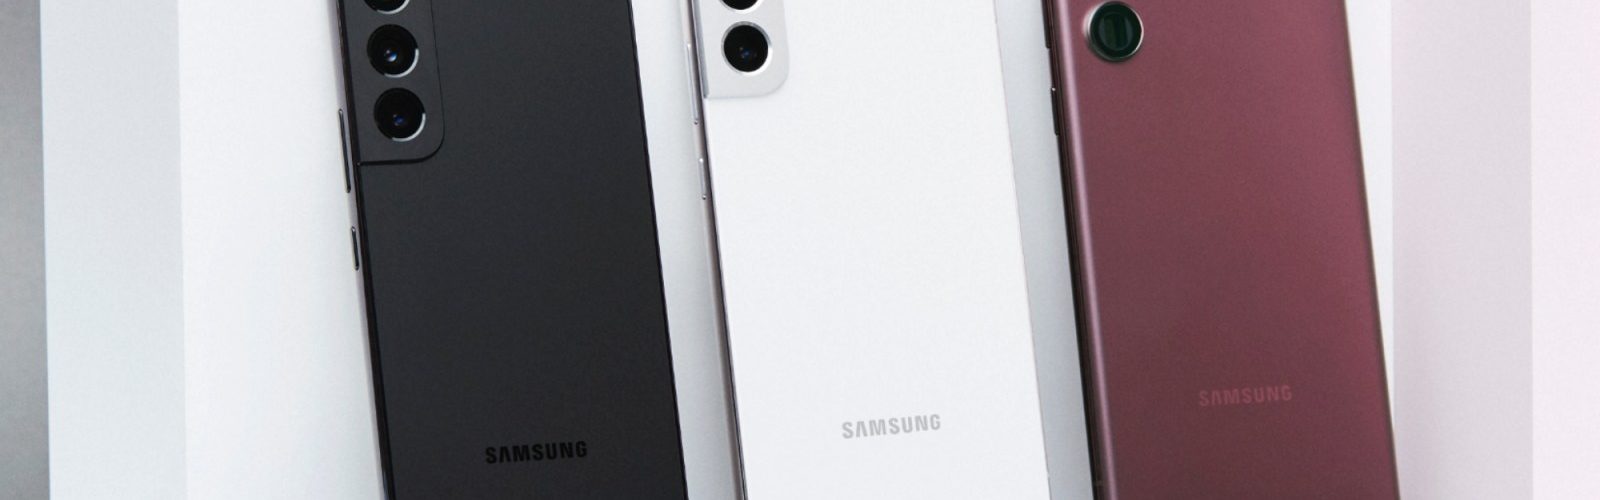 Samsung Galaxy S22 Reihe